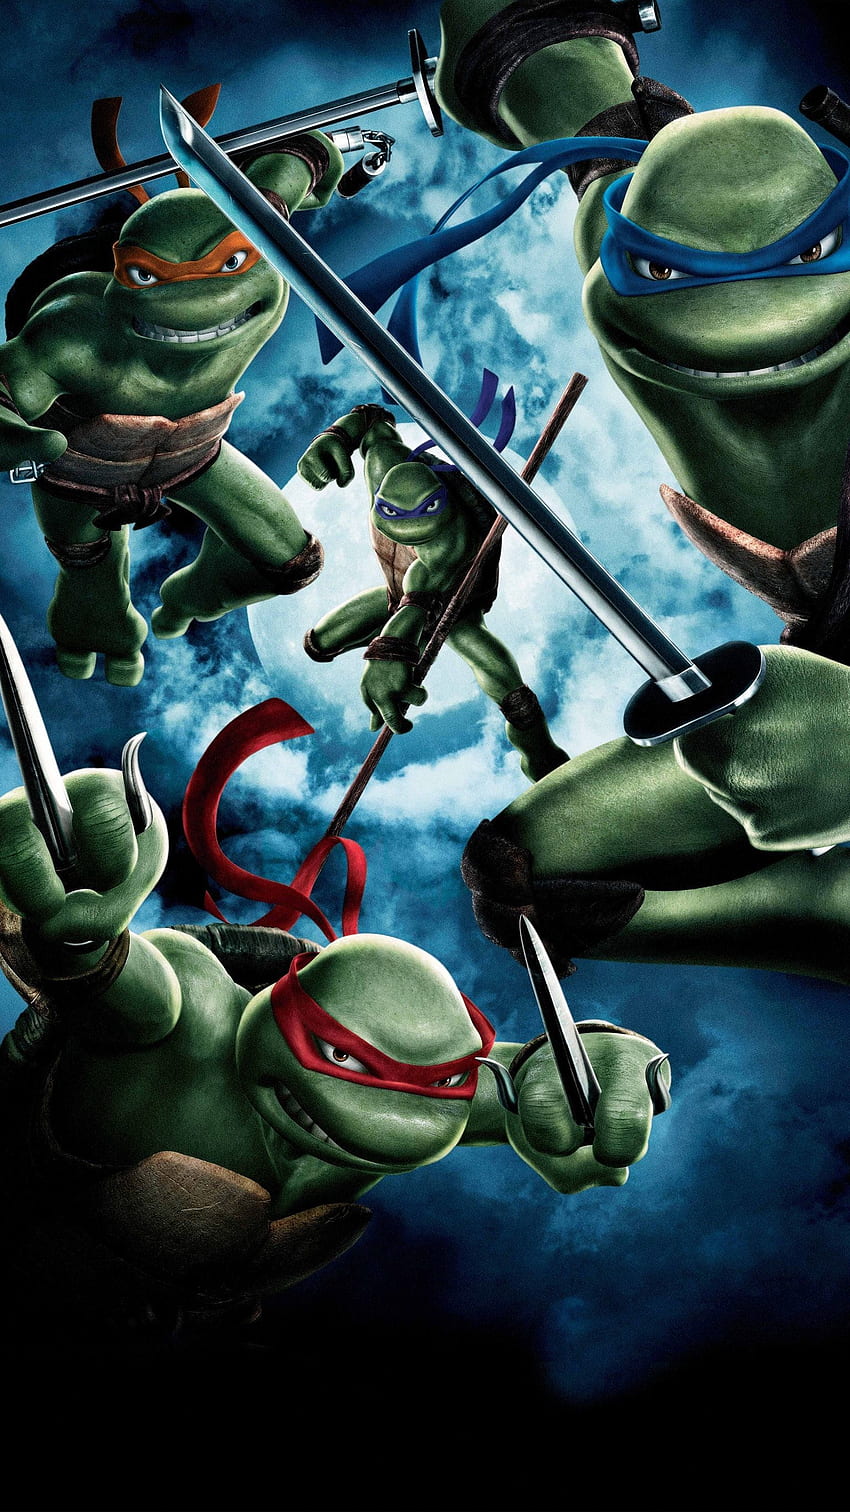 Ninja turtles wallpaper  Tmnt wallpaper Turtle wallpaper Teenage mutant  ninja turtles art